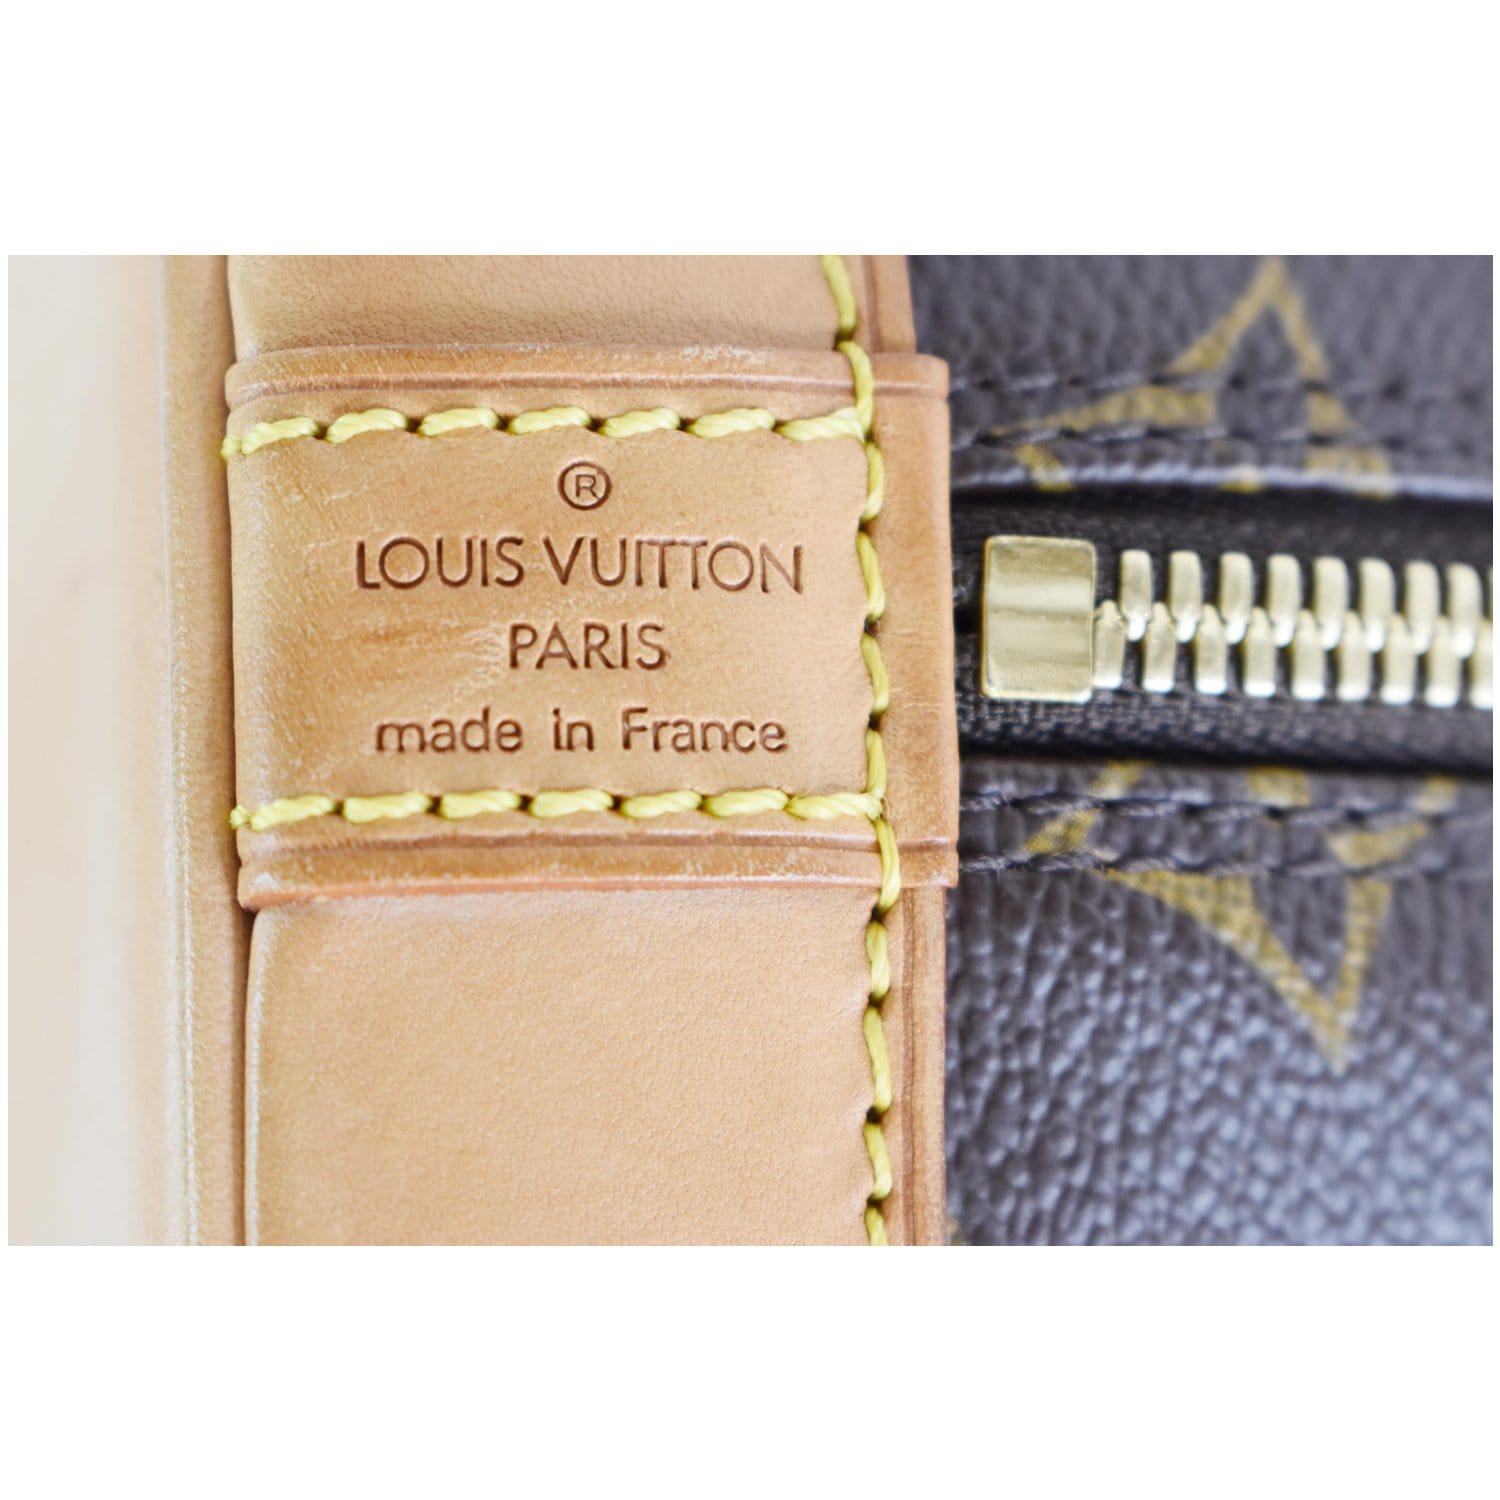 Date Code & Stamp] Louis Vuitton Alma Monogram Canvas